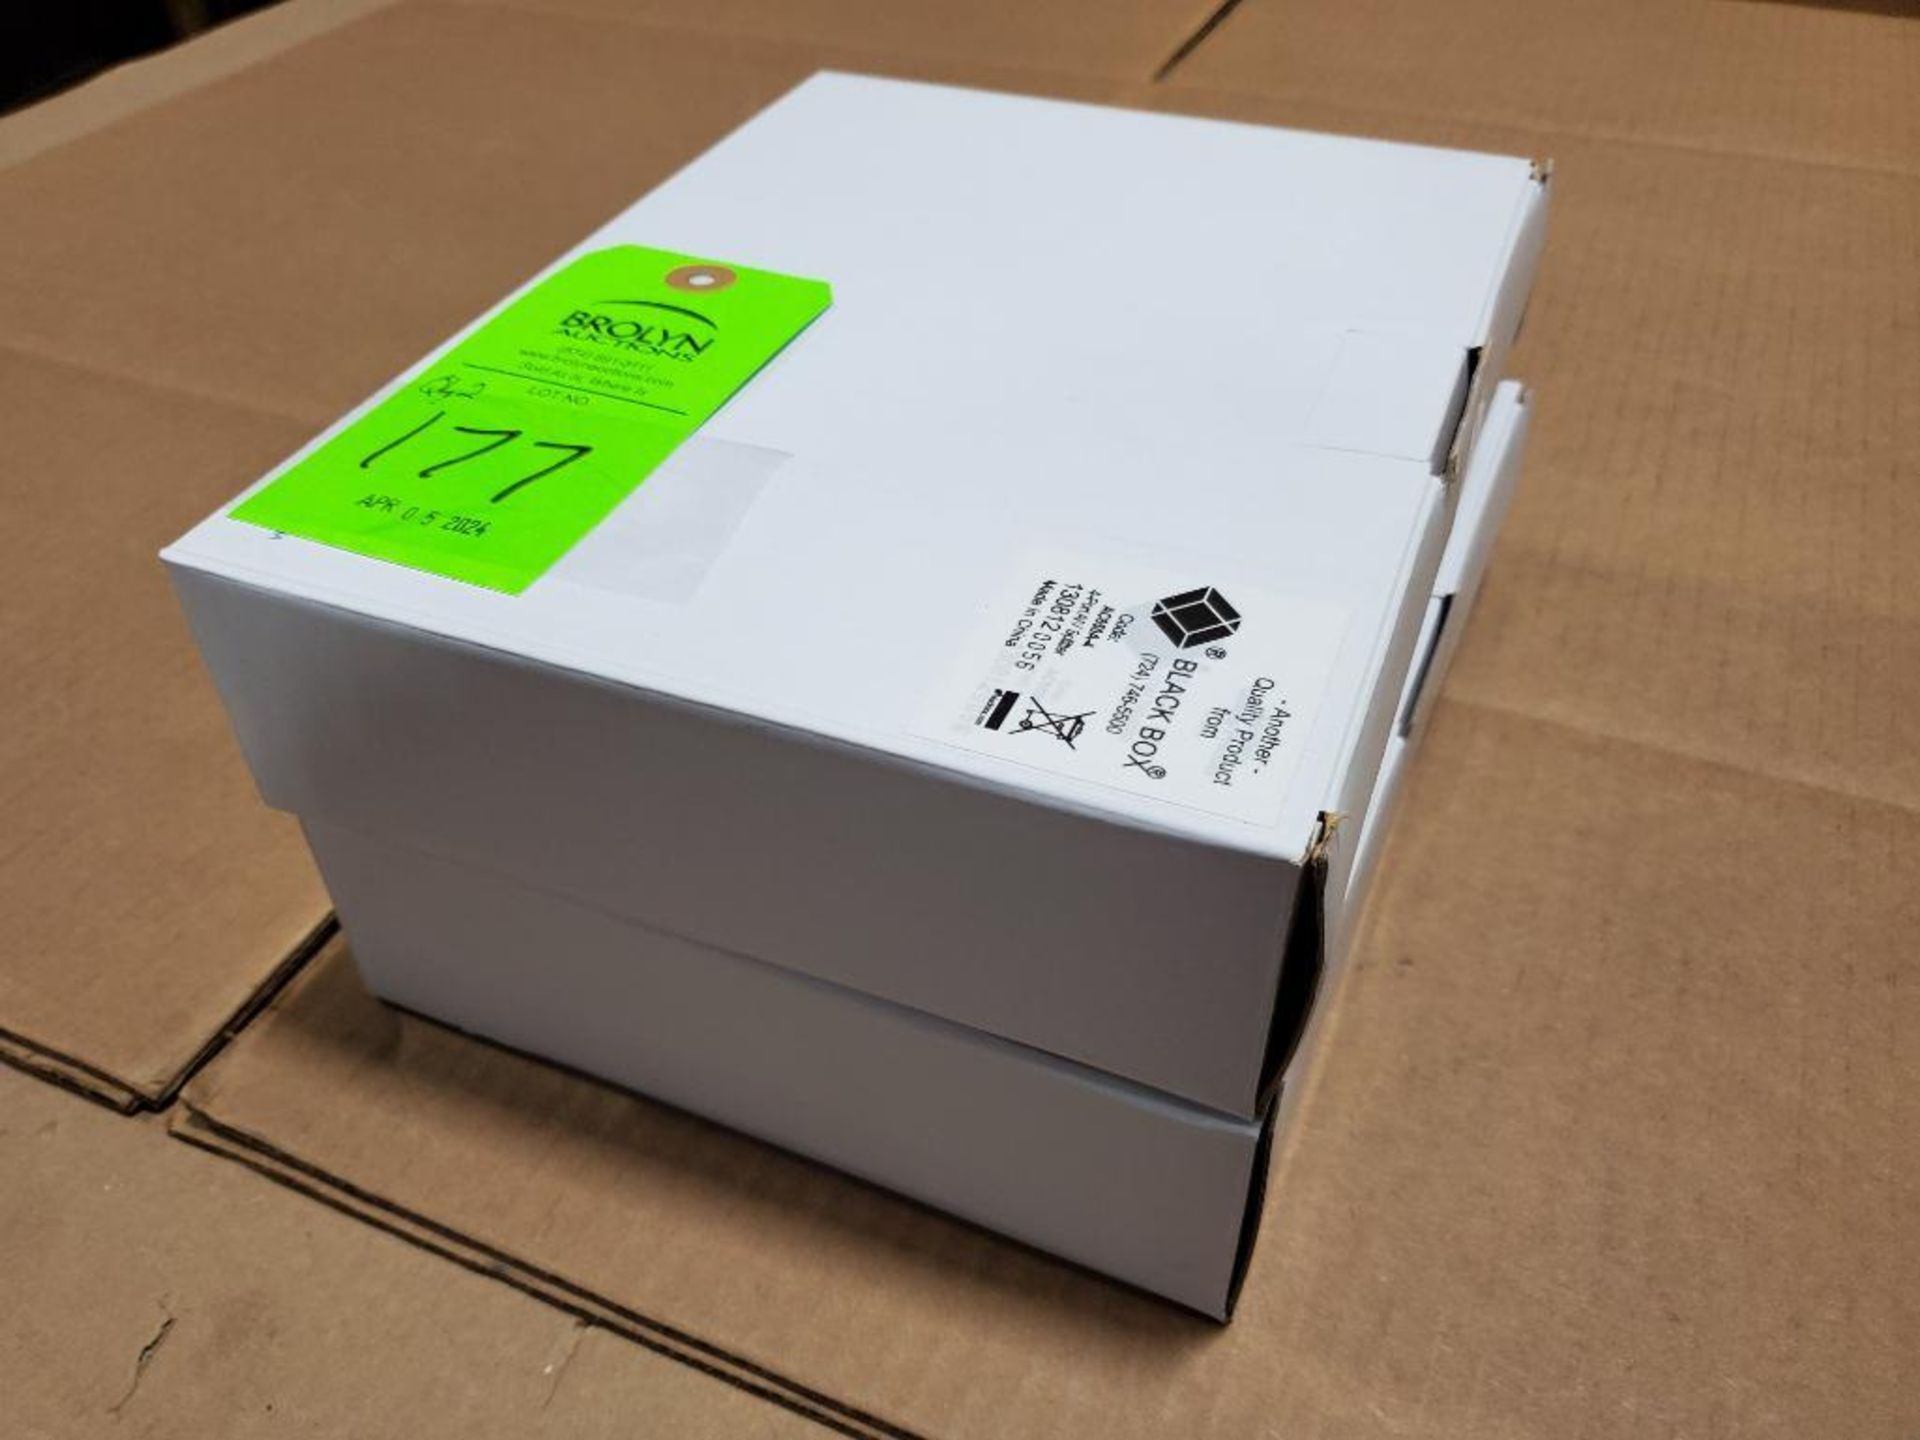 Qty 2 - Black Box 4-port A/V splitter. Part number AC650A-4.